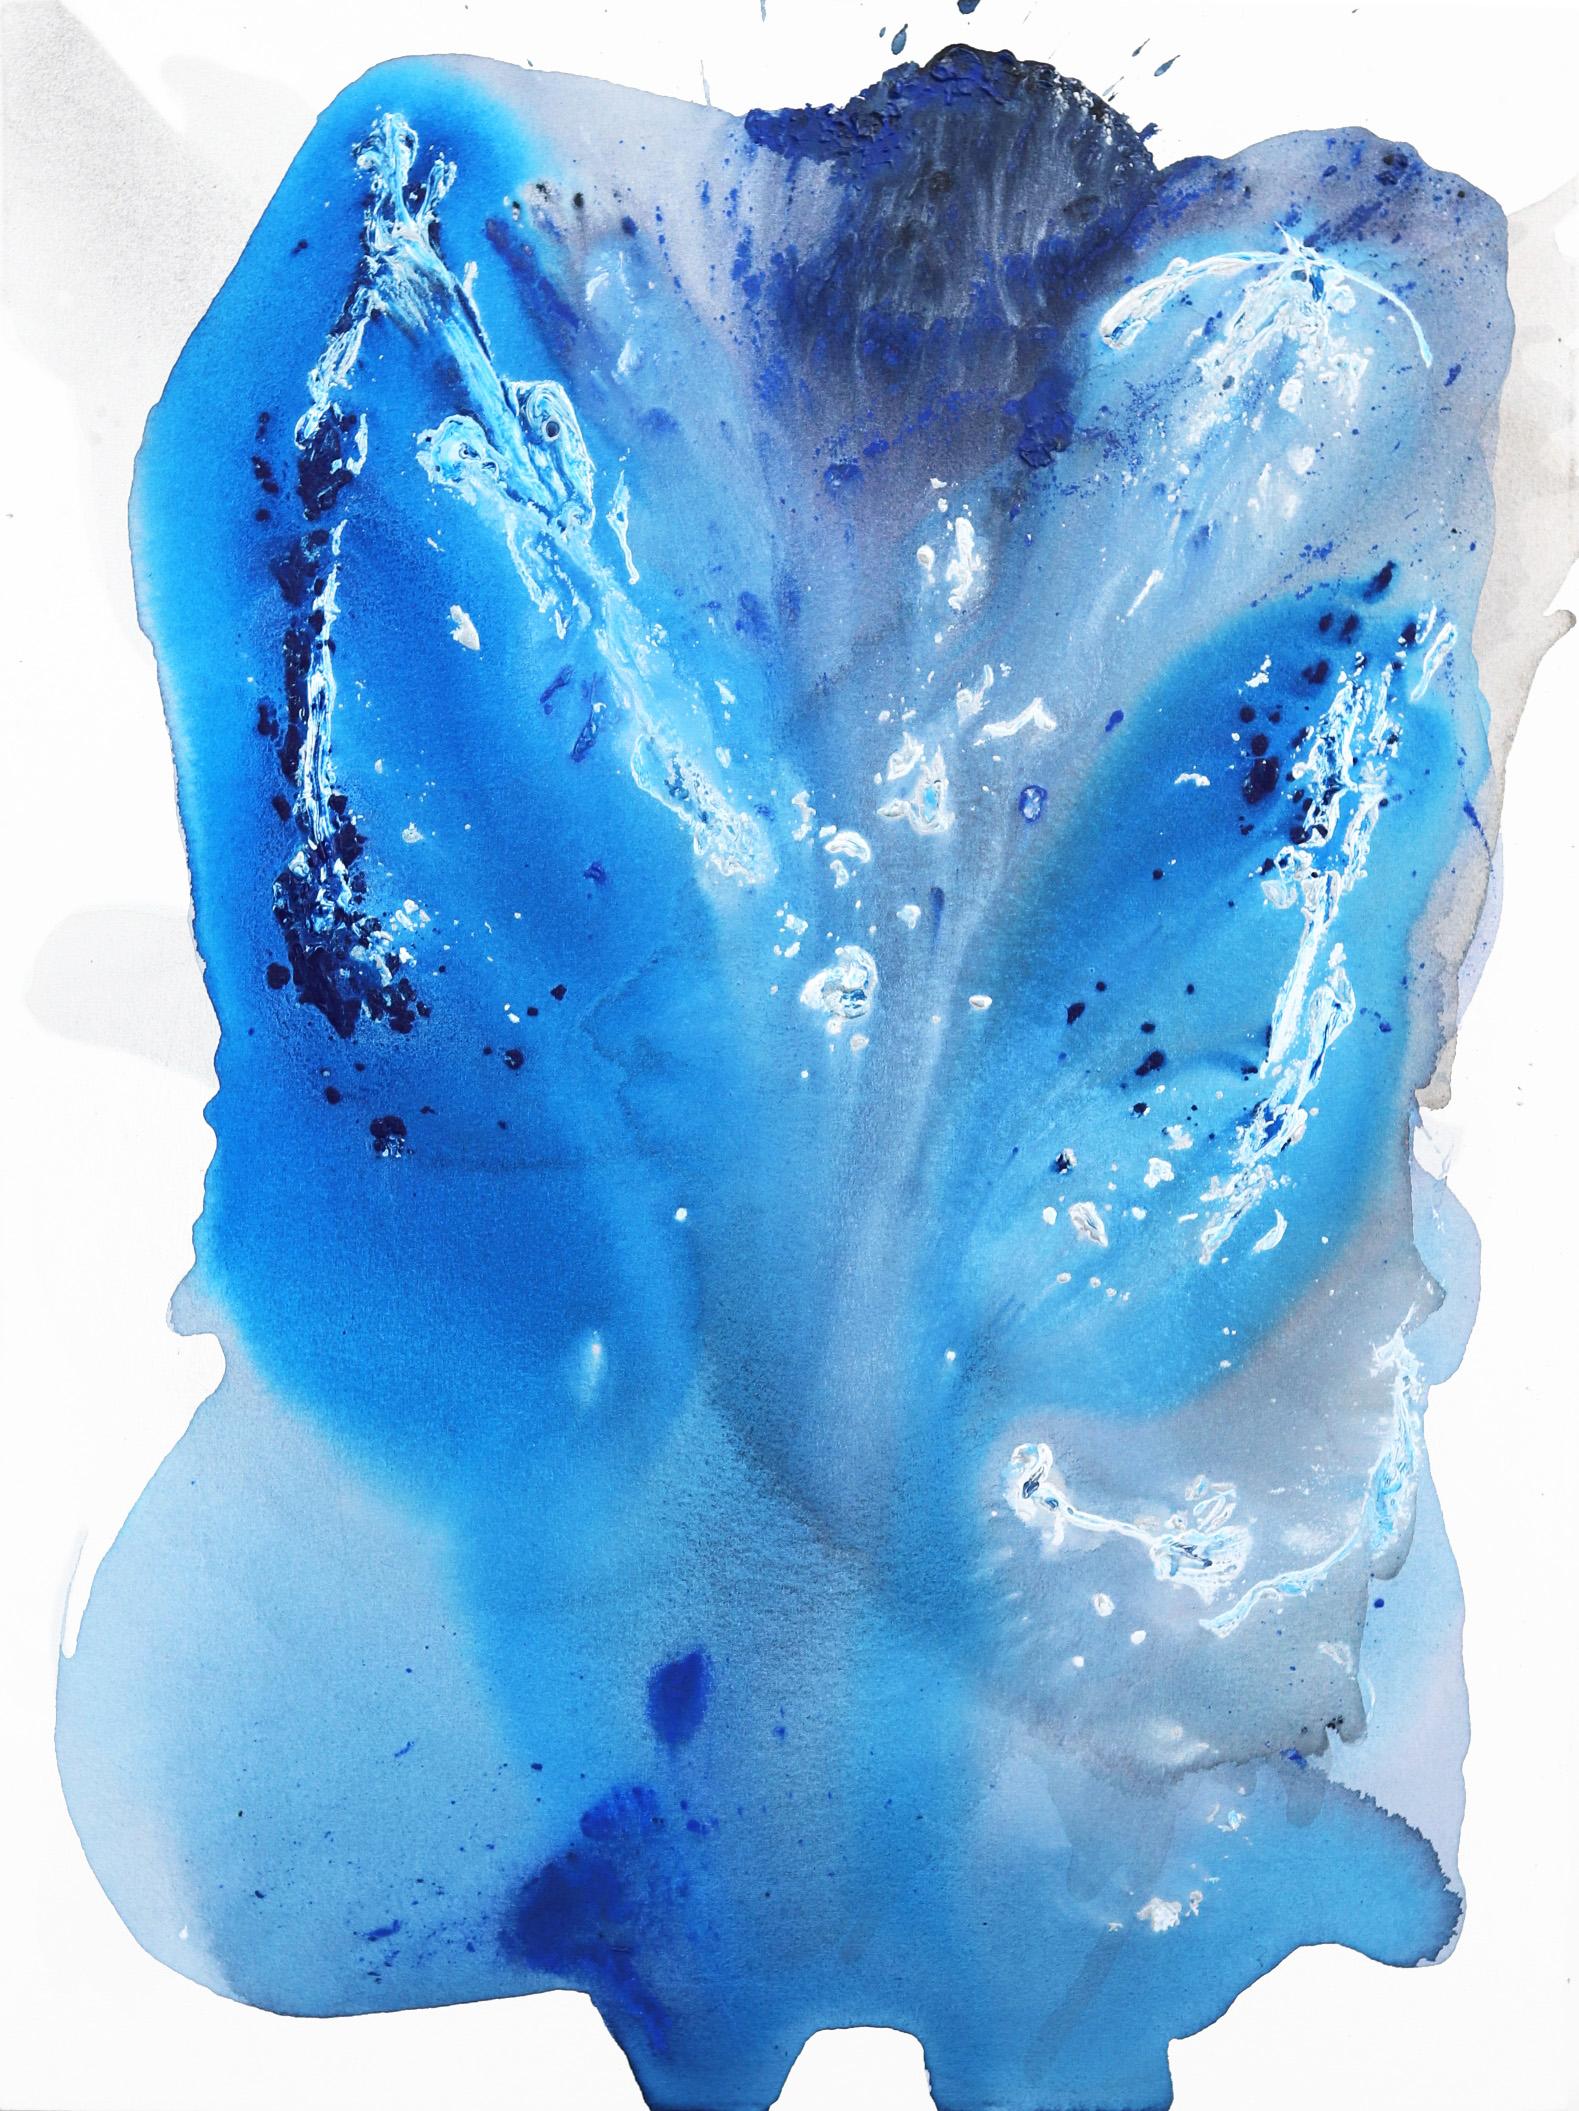 Abstract Painting Clara Berta - Rhapsody en bleu  - Grande peinture abstraite minimaliste bleue et blanche texturée